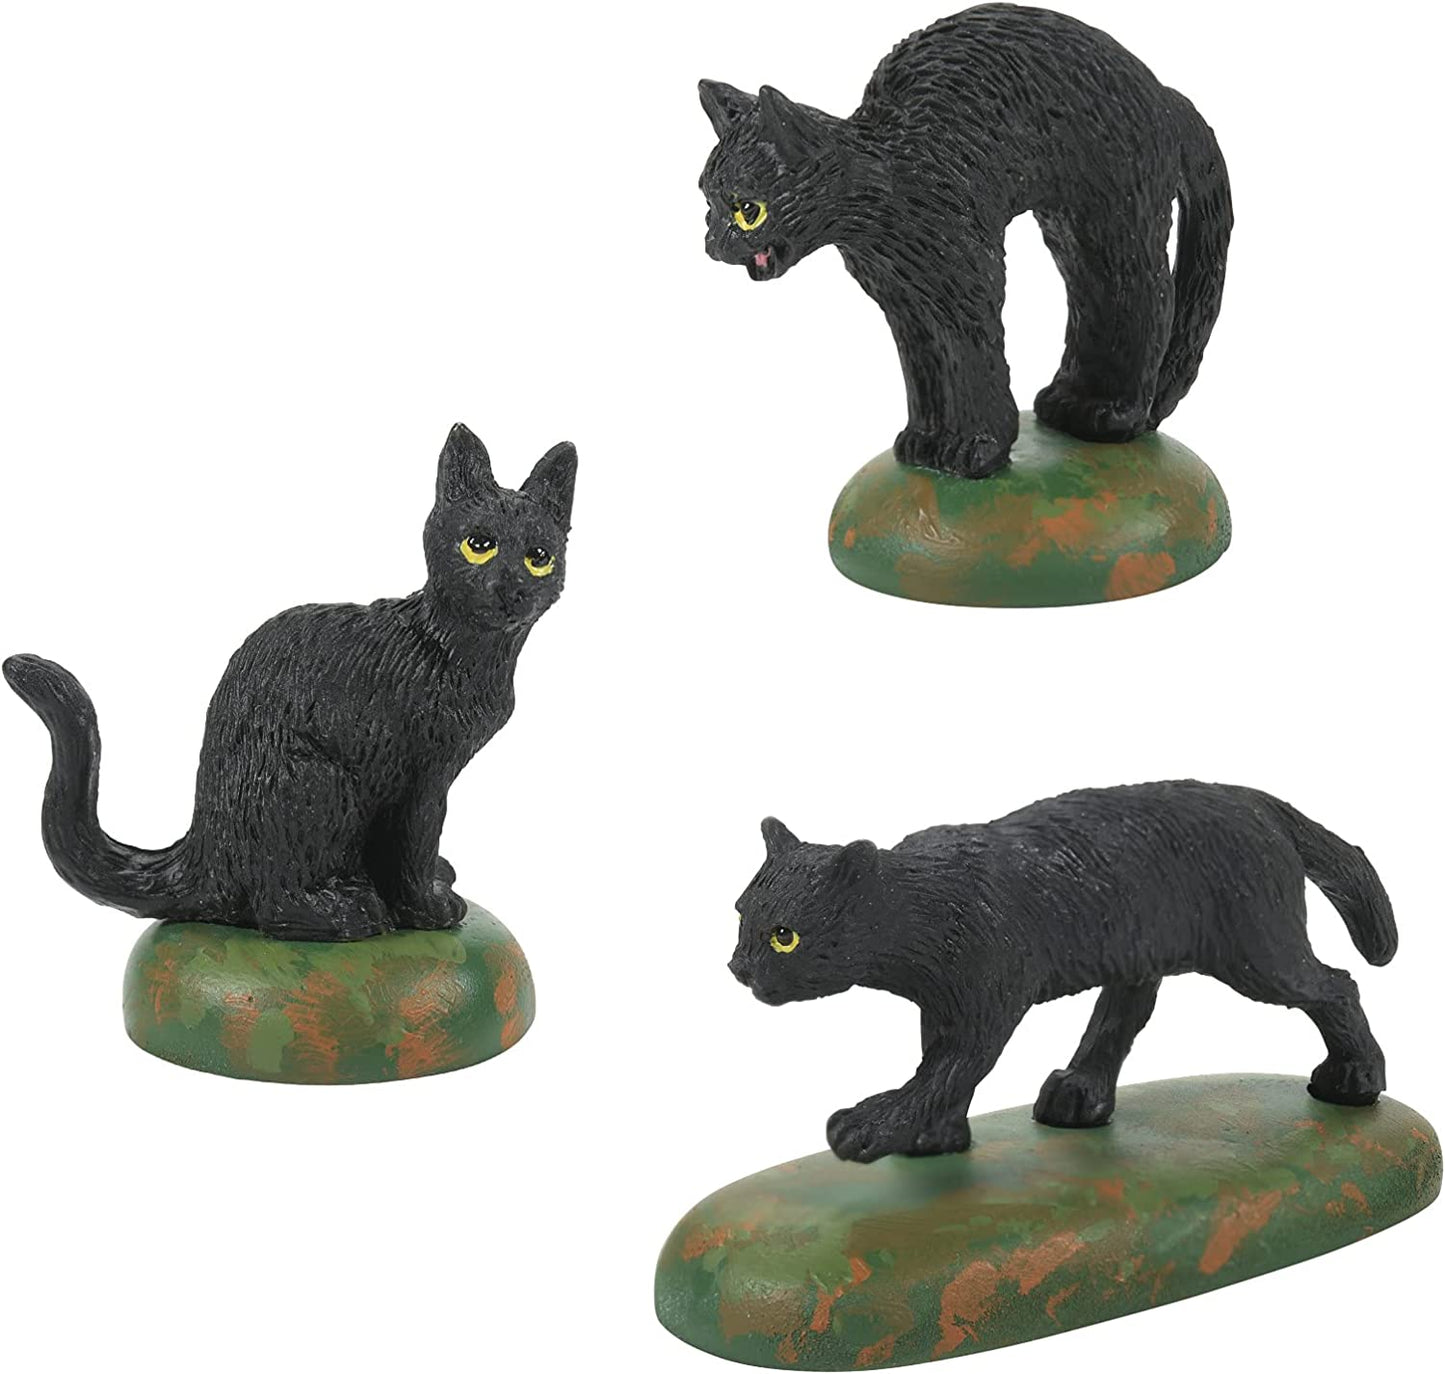 A Clowder of Black Cats (Set of 3)